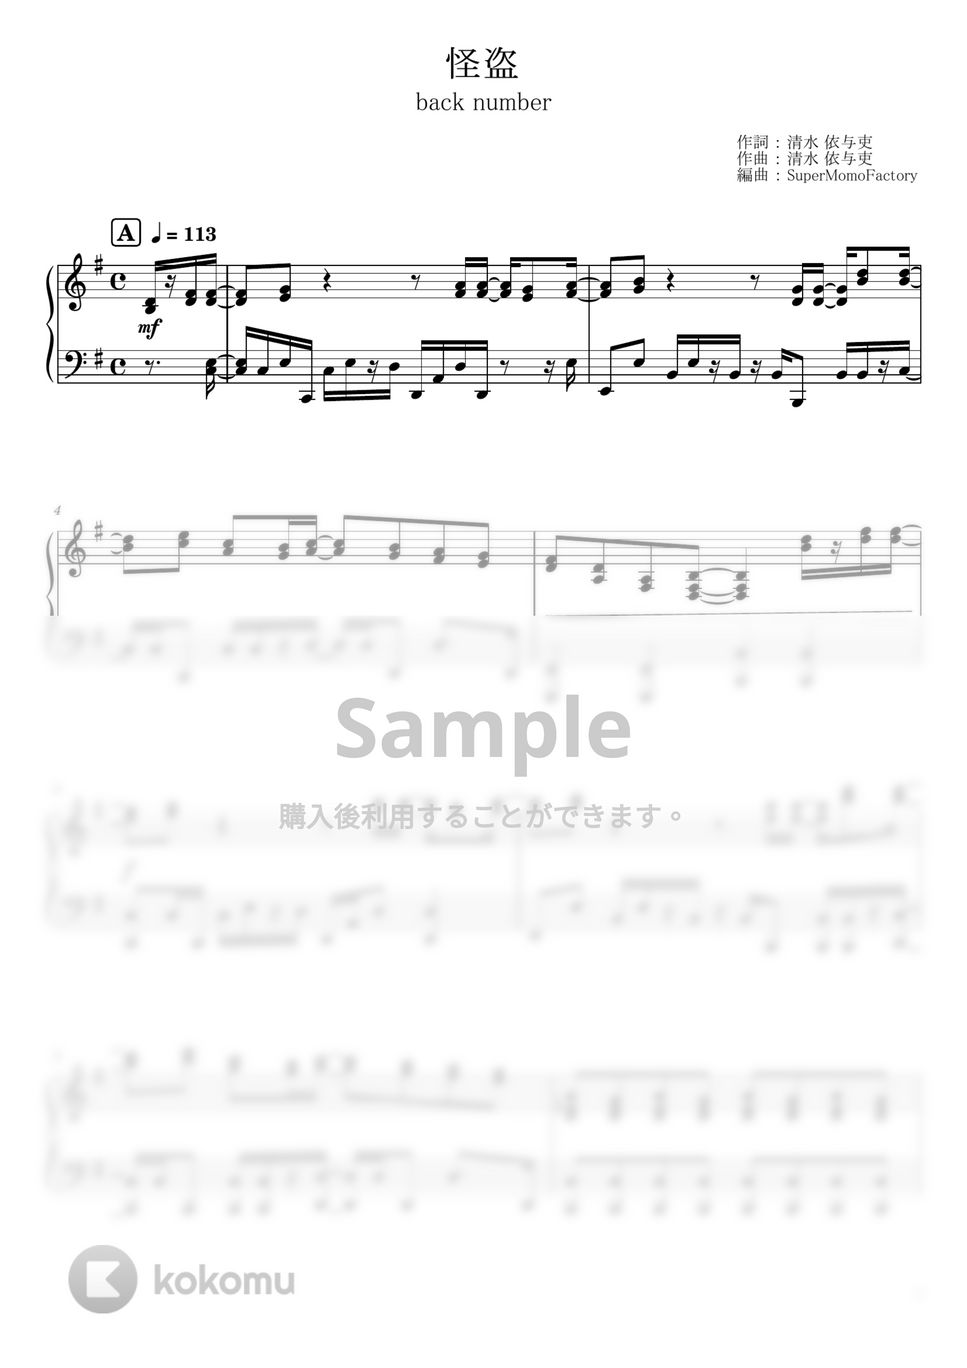 back number - 怪盗 (ピアノソロ / 上級) by SuperMomoFactory